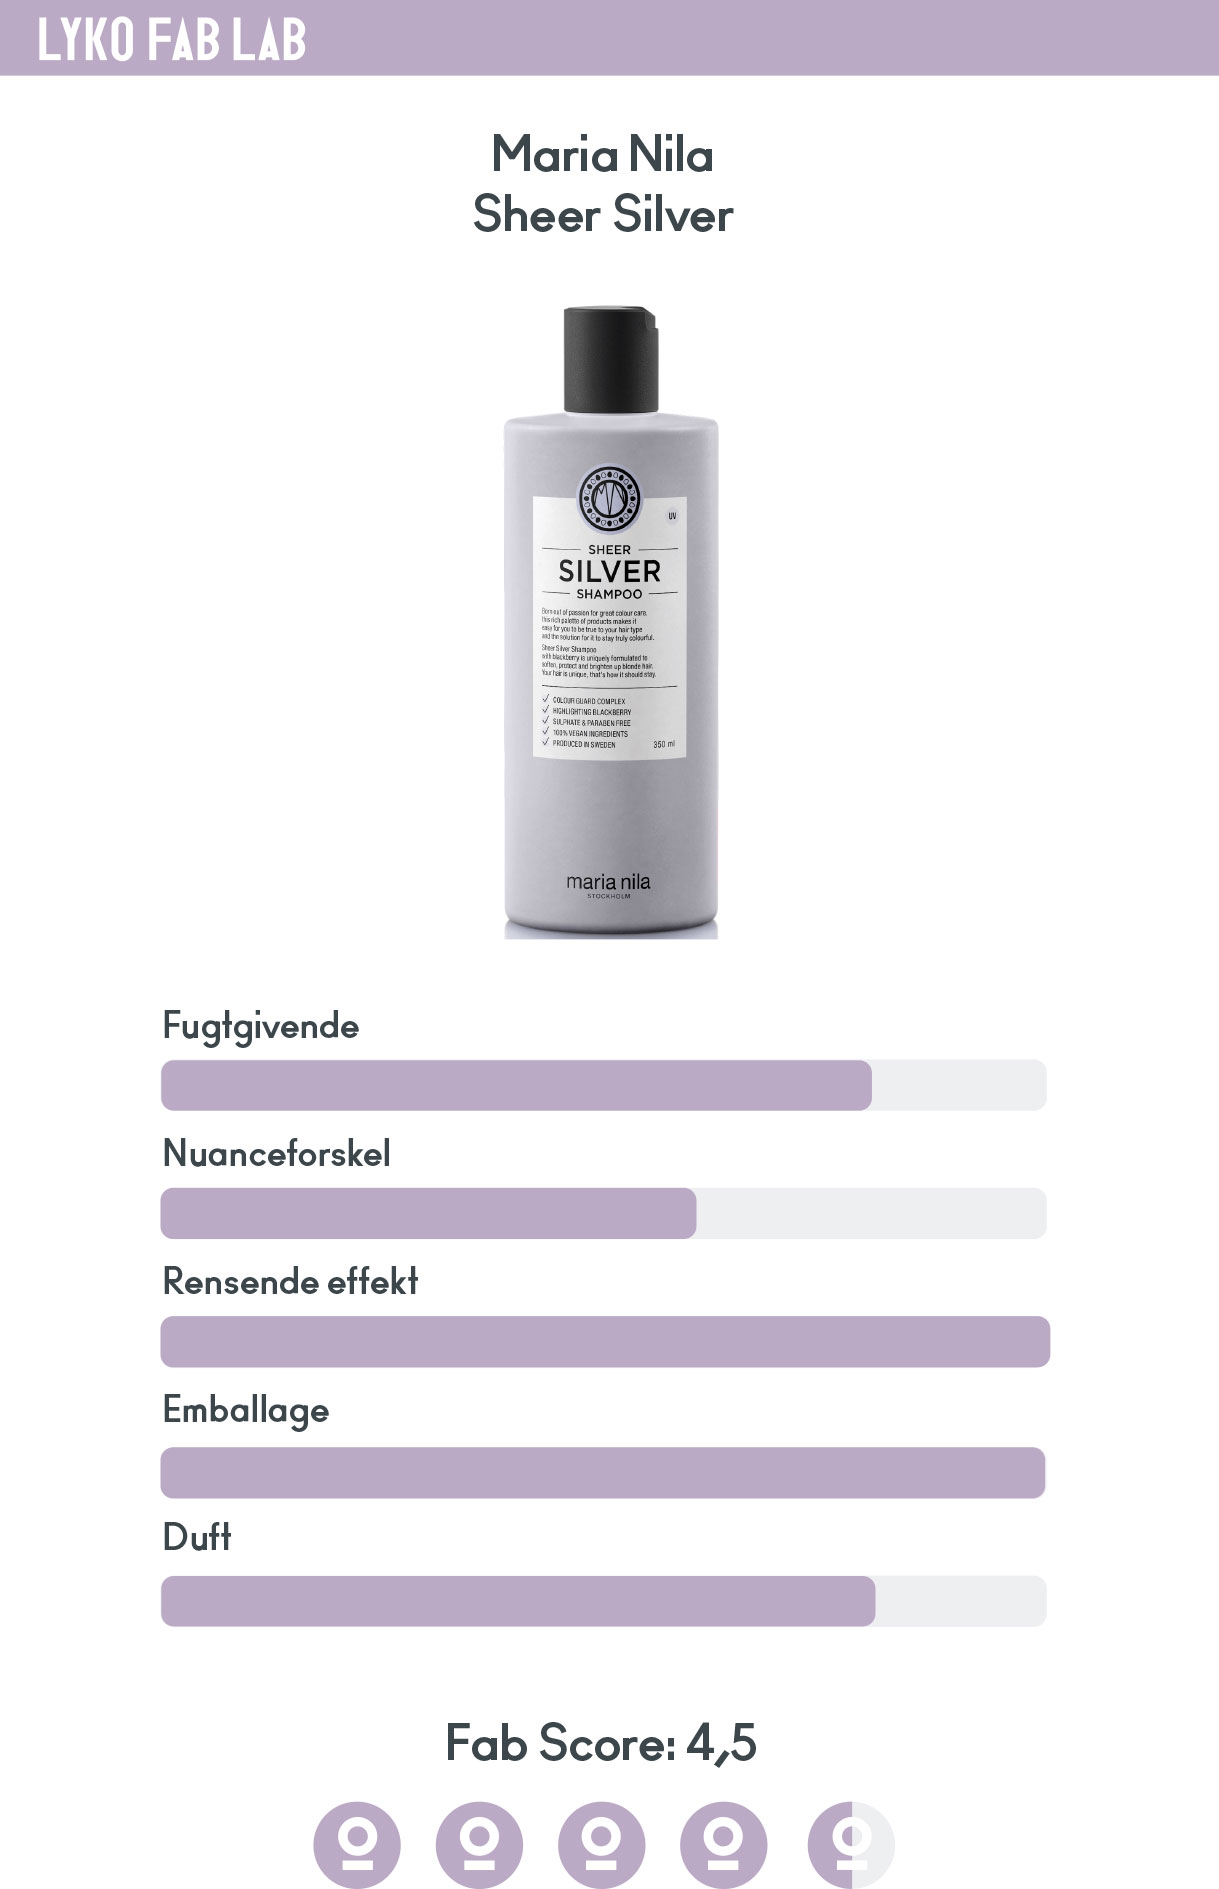 Silver shampoo, er bedst i test! | lyko.com